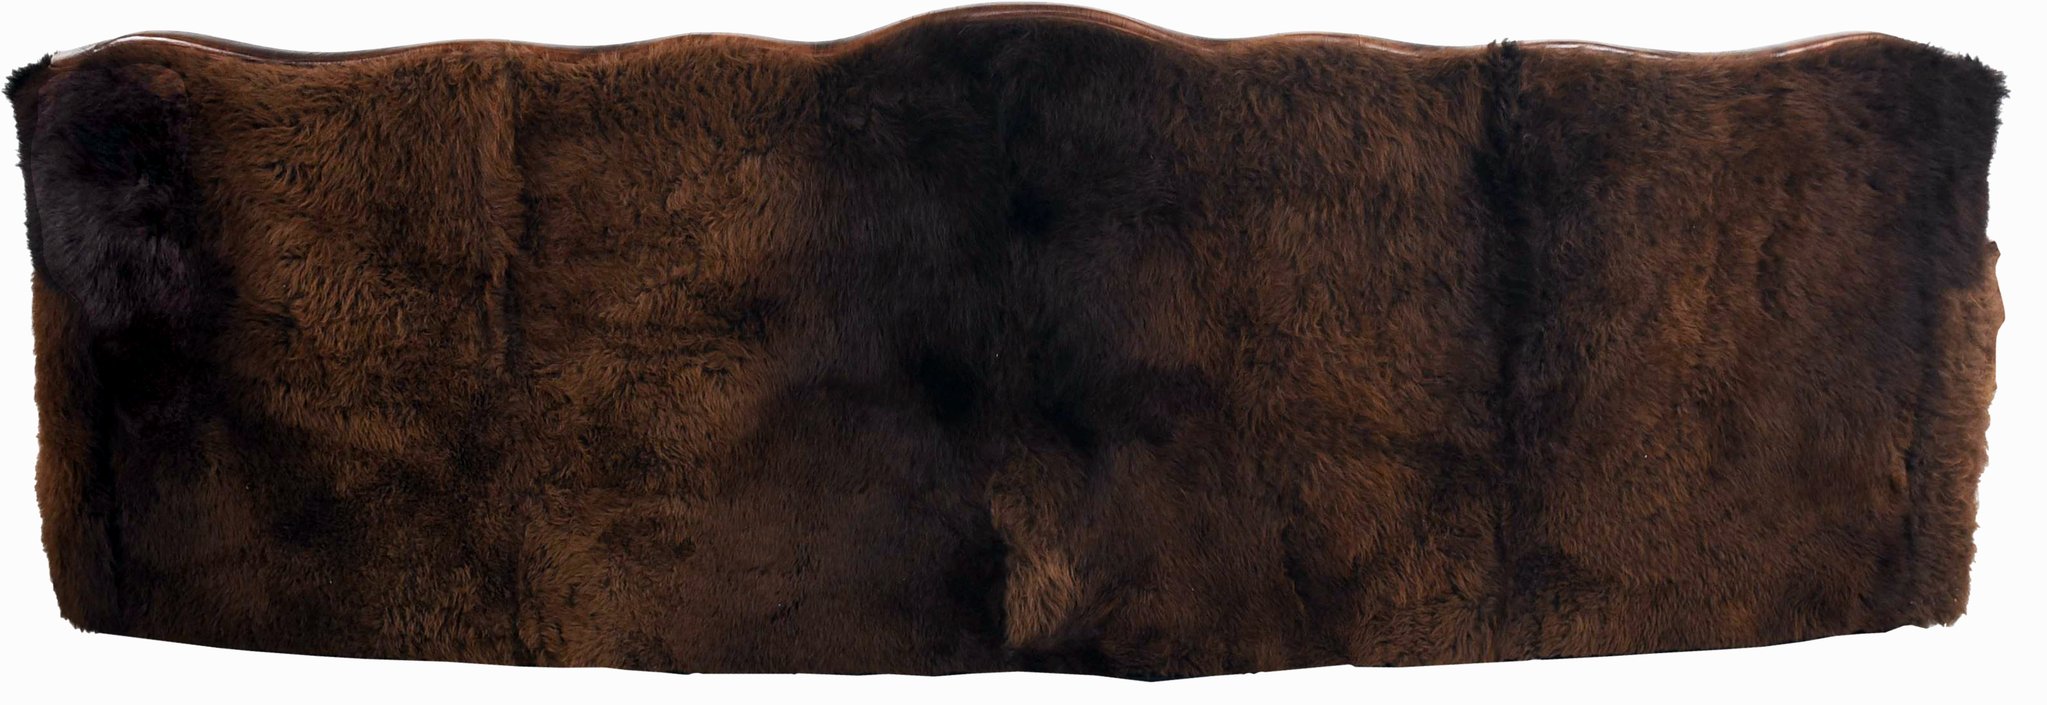 Yellowstone Buffalo Curved Back Sofa